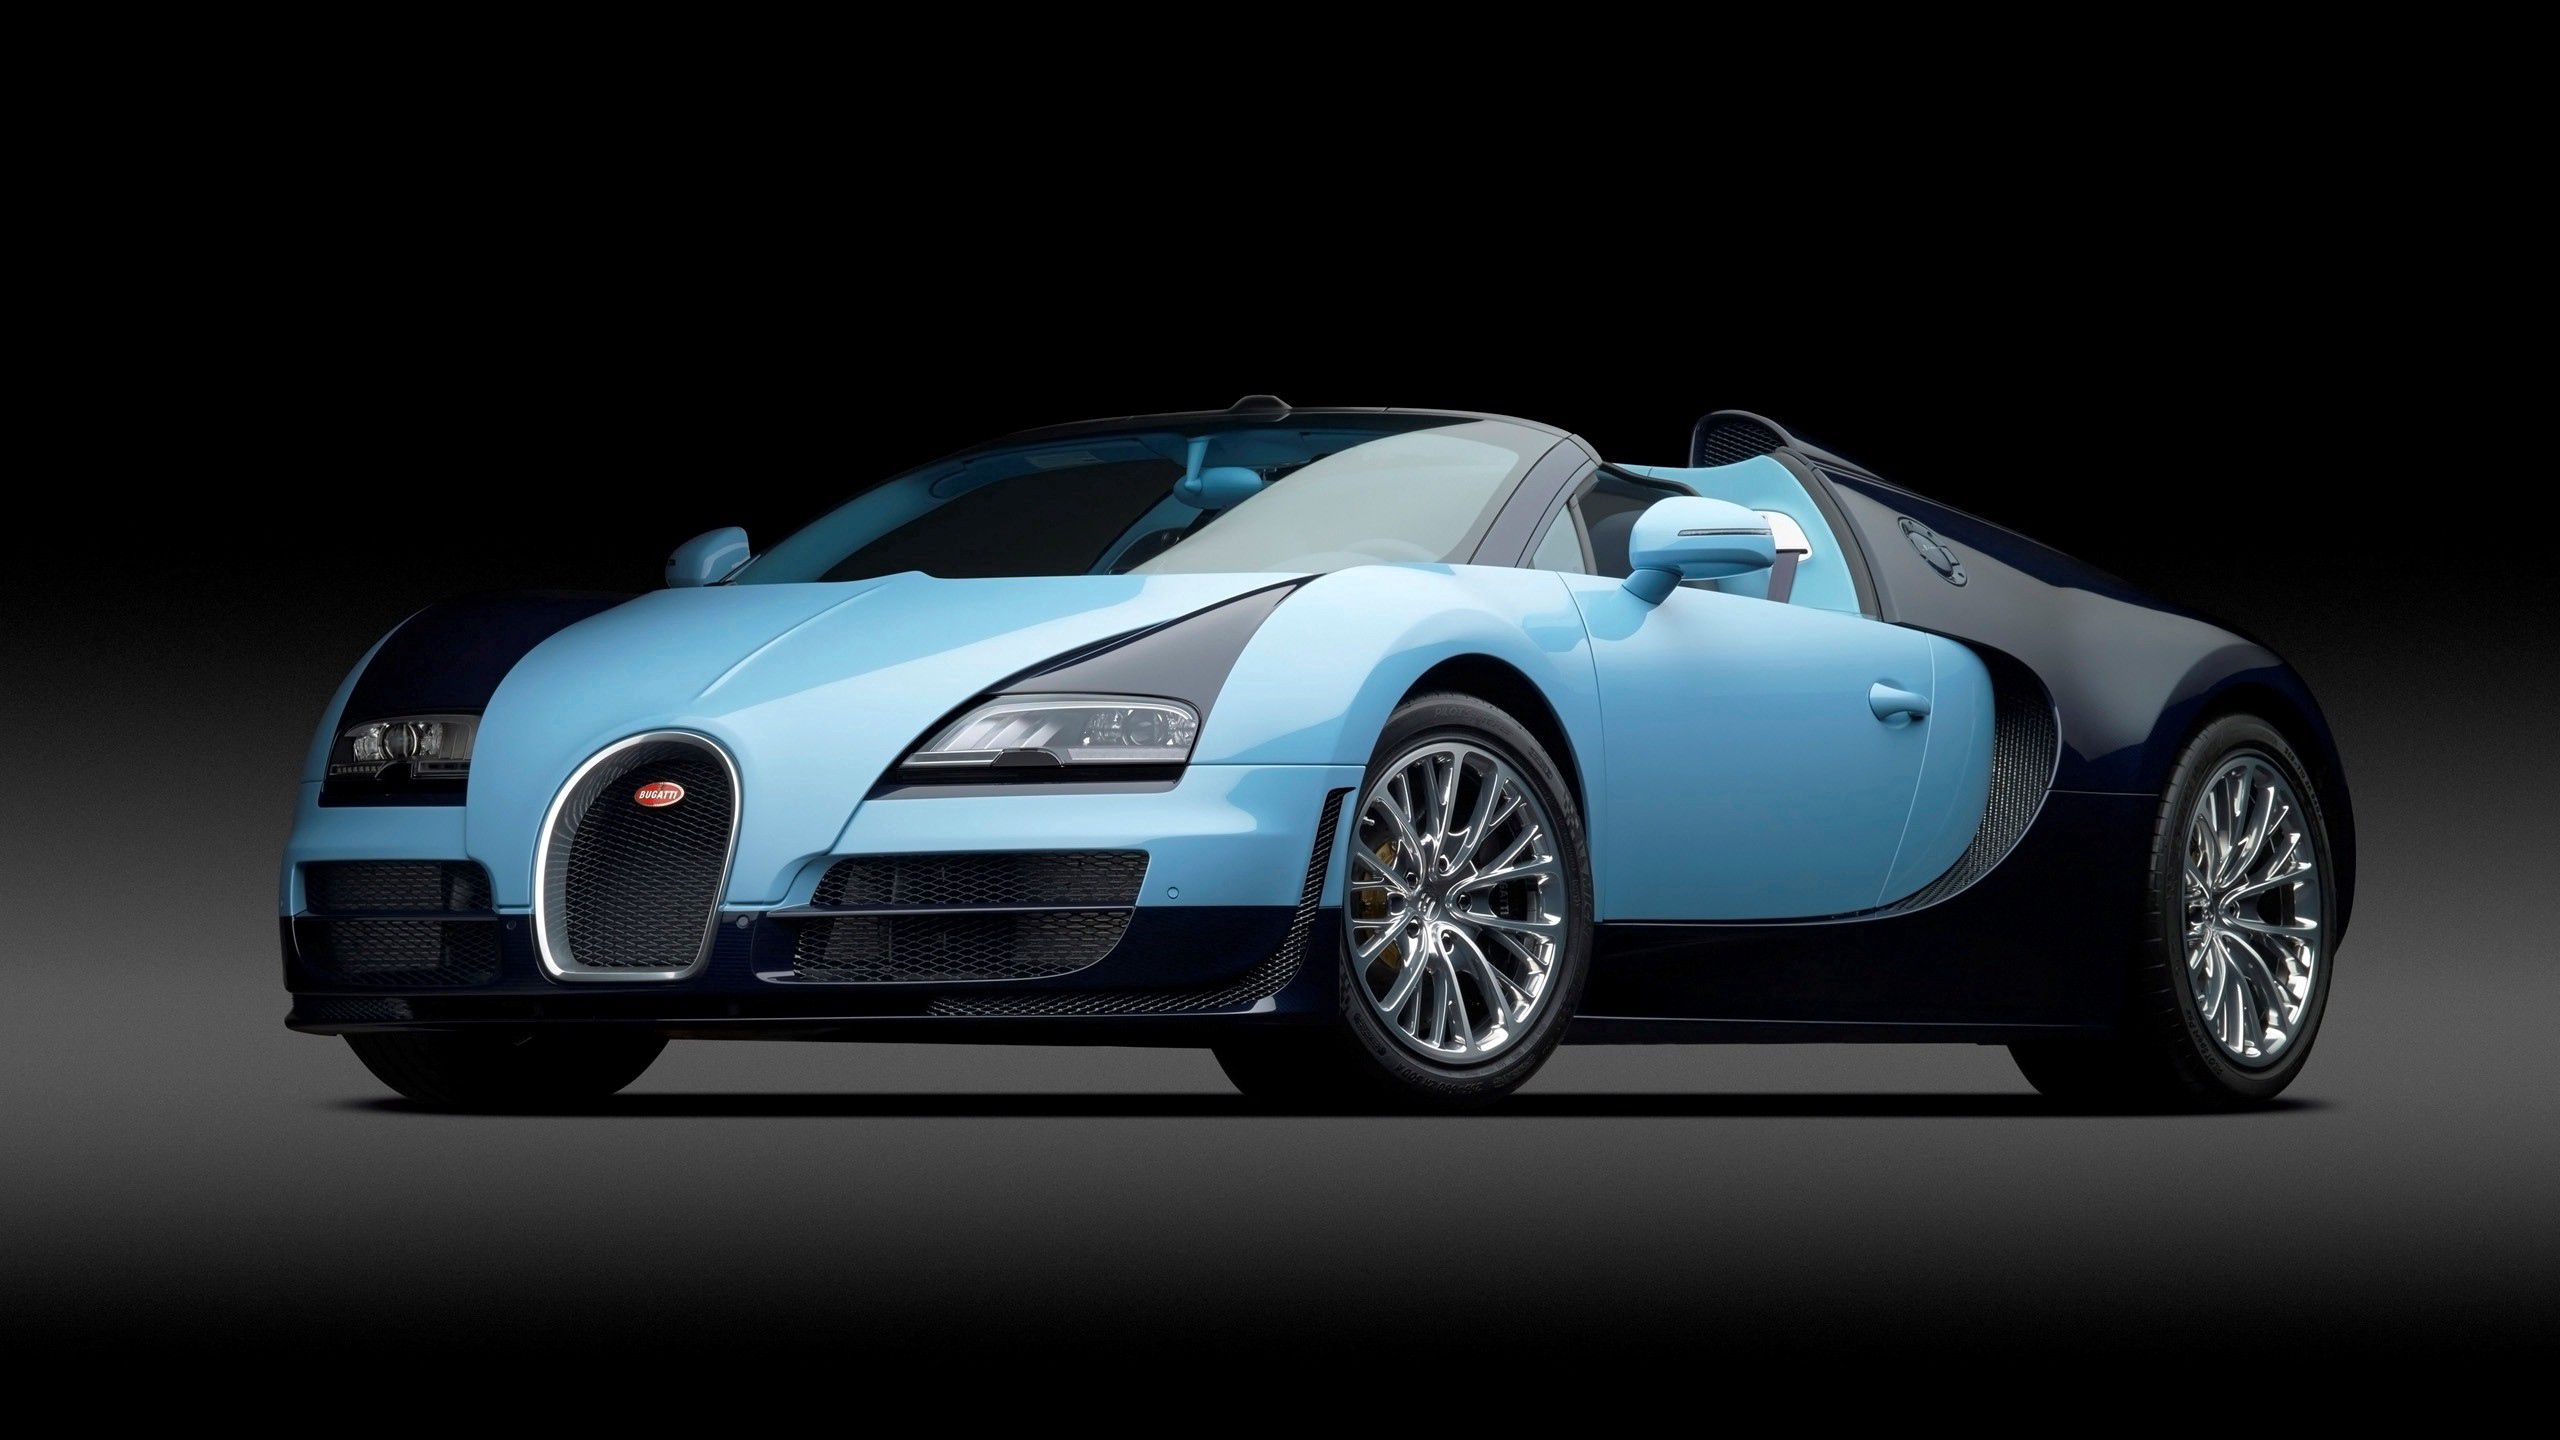 Скачать обои Bugatti Veyron Vitesse Jean Pierre Wimille на телефон бесплатно